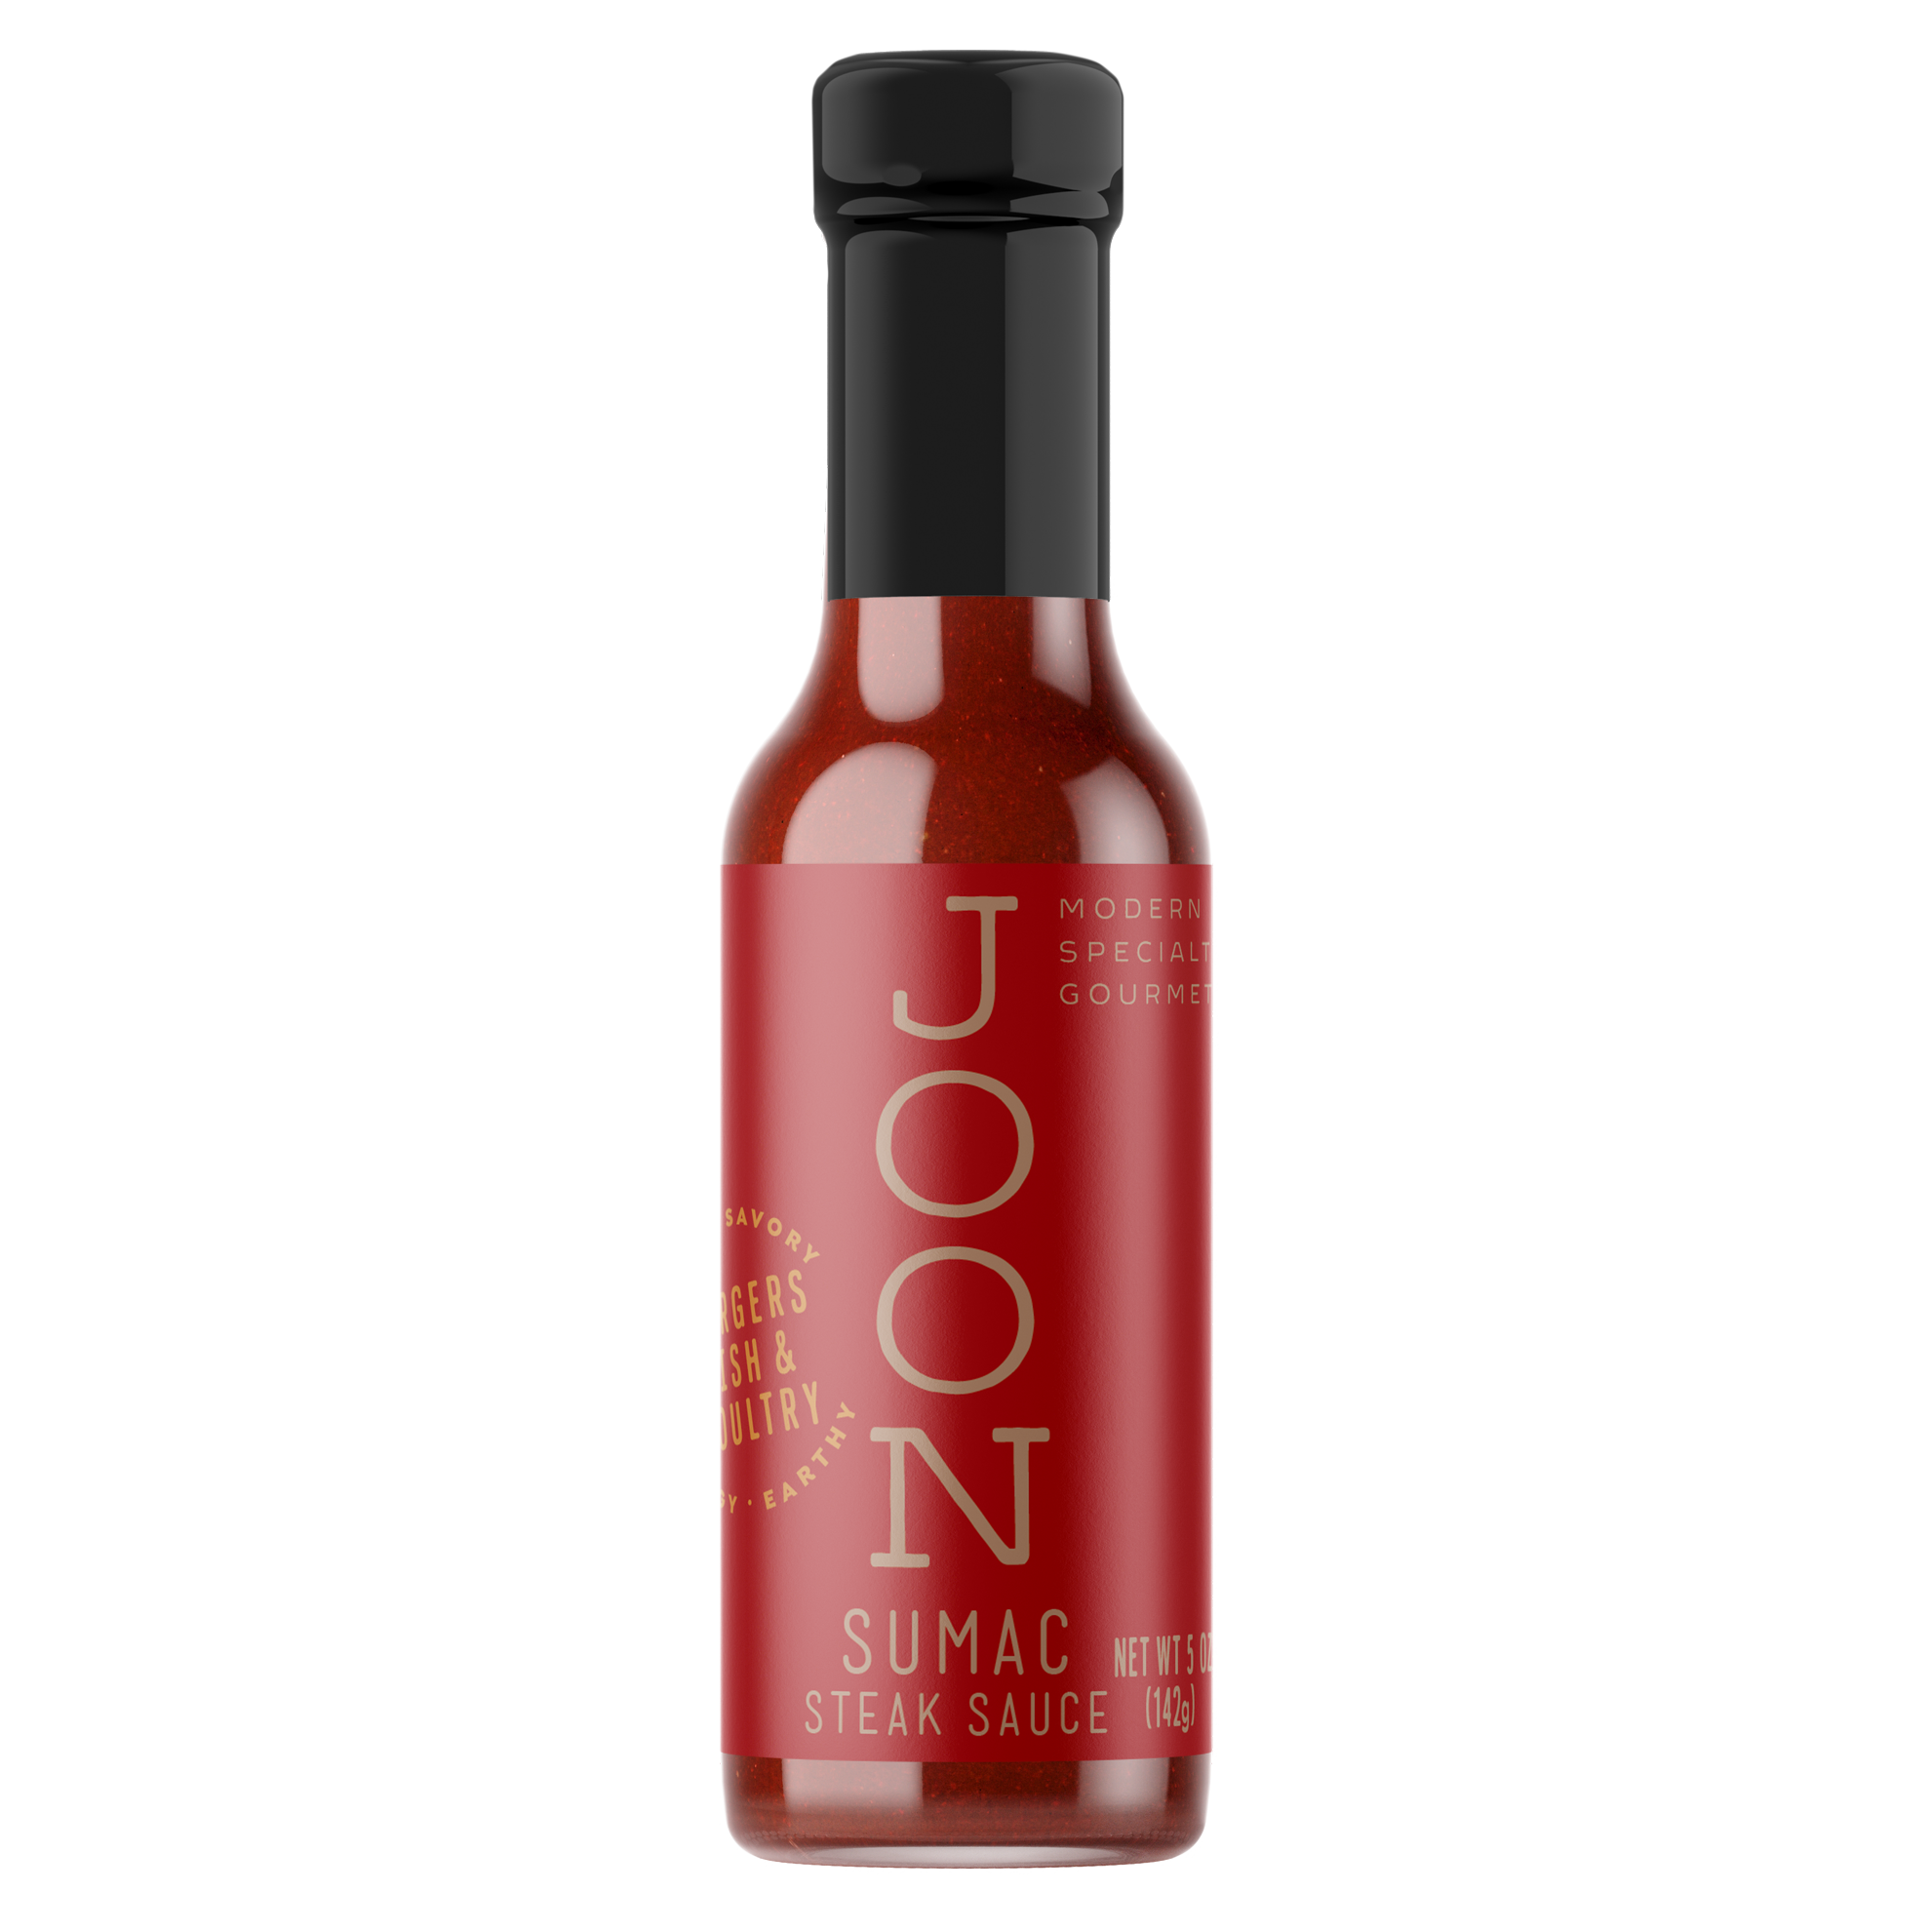 https://joongourmet.com/wp-content/uploads/2020/08/Sumac-Steak-Sauce.png